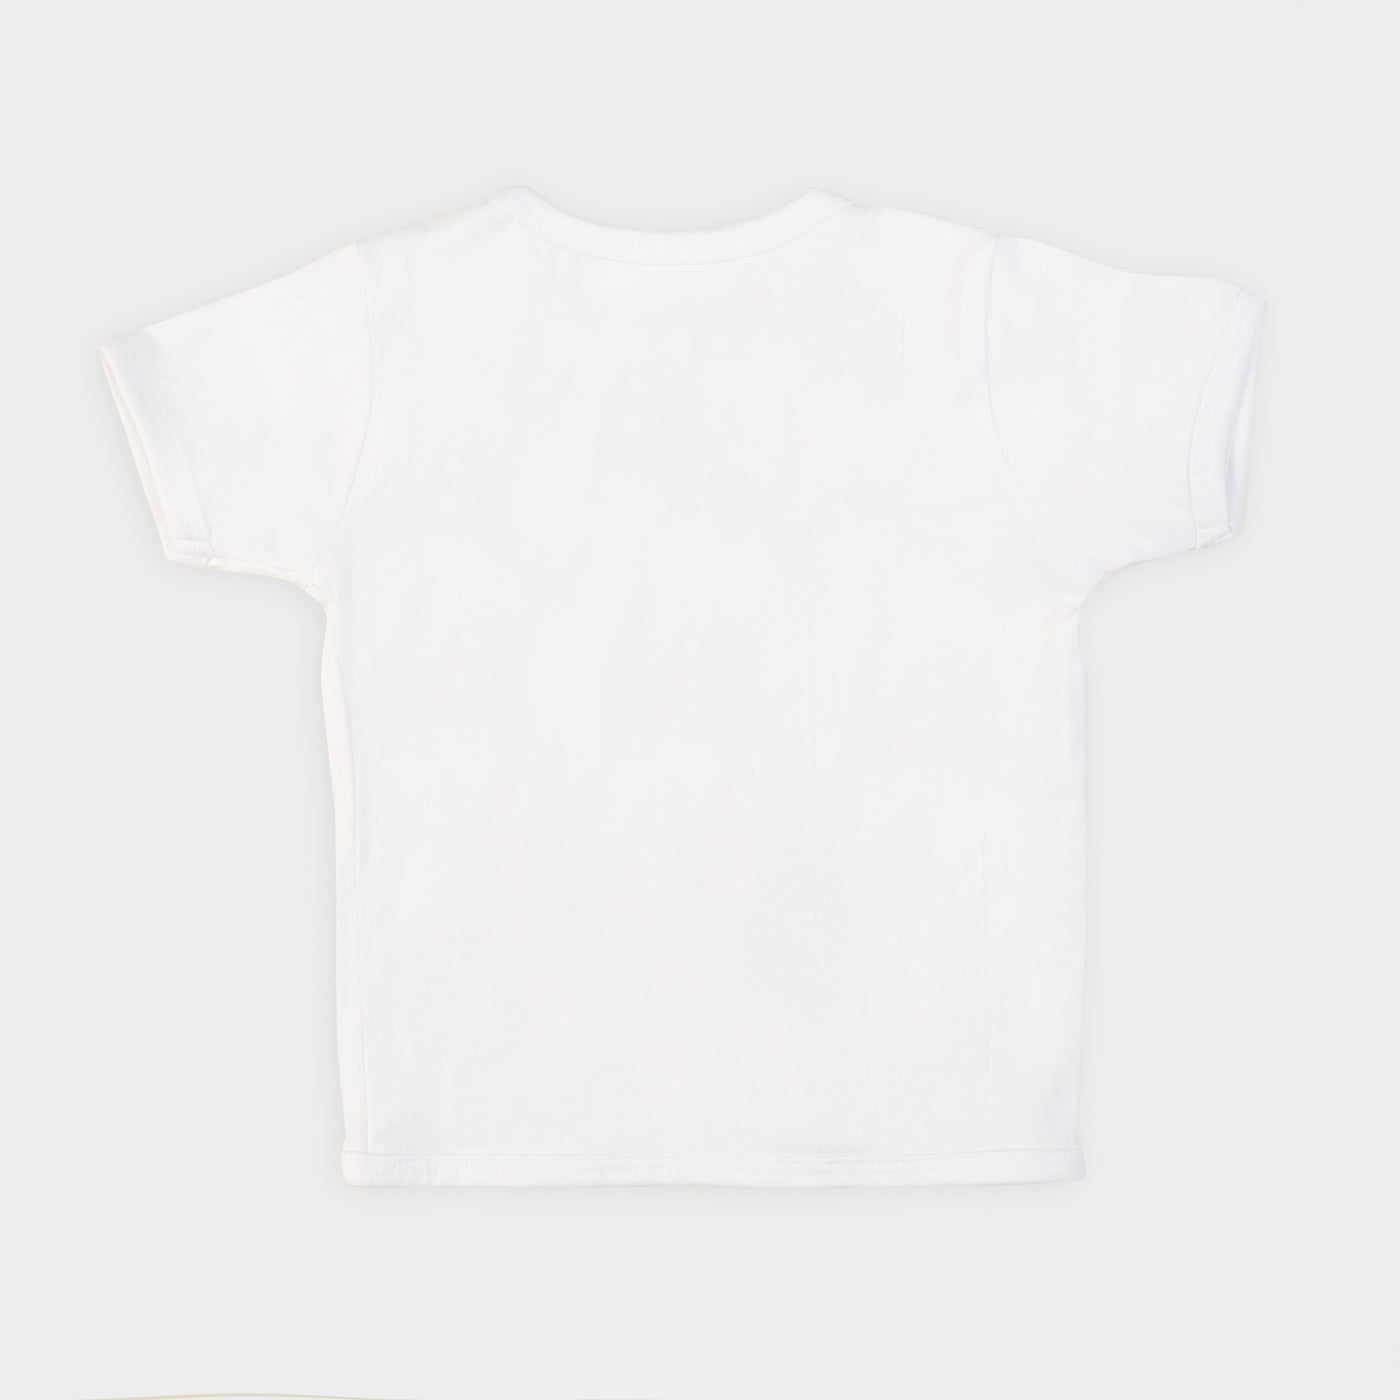 Infant Unisex Cotton 3Pcs Cardigan - White